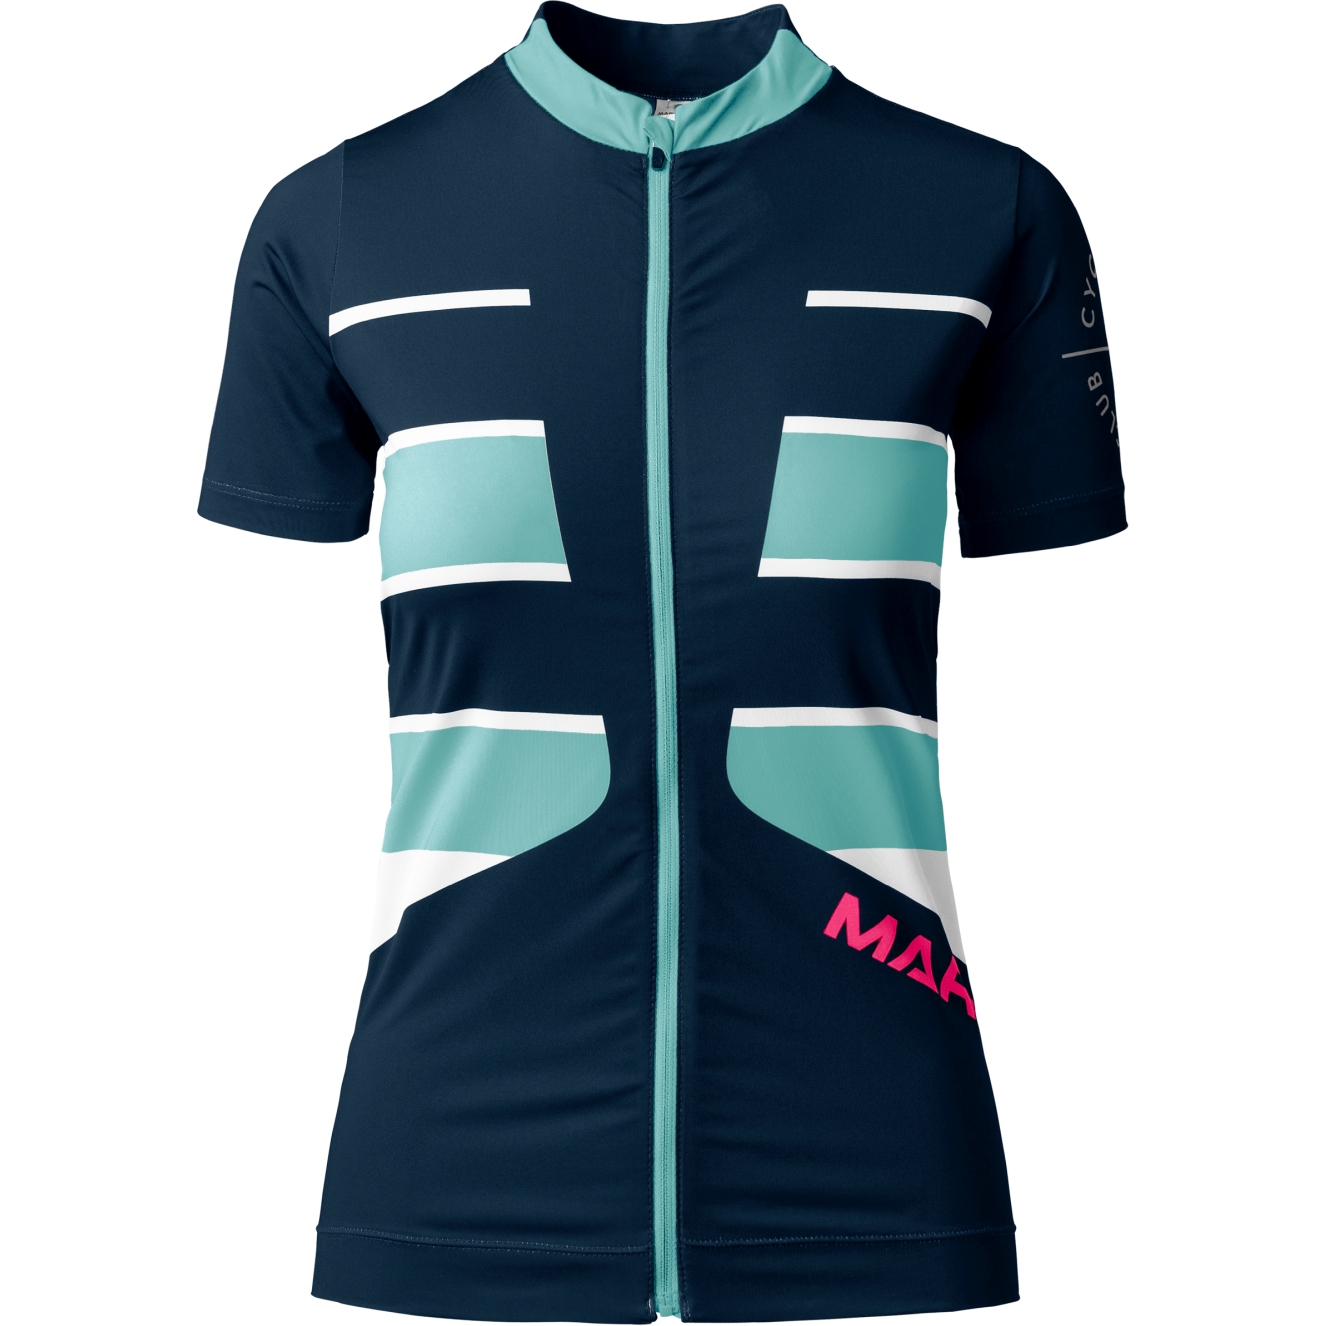 Produktbild von Martini Sportswear Flowtrail Zip Dynamic Kurzarmtrikot Damen - true navy/skylight